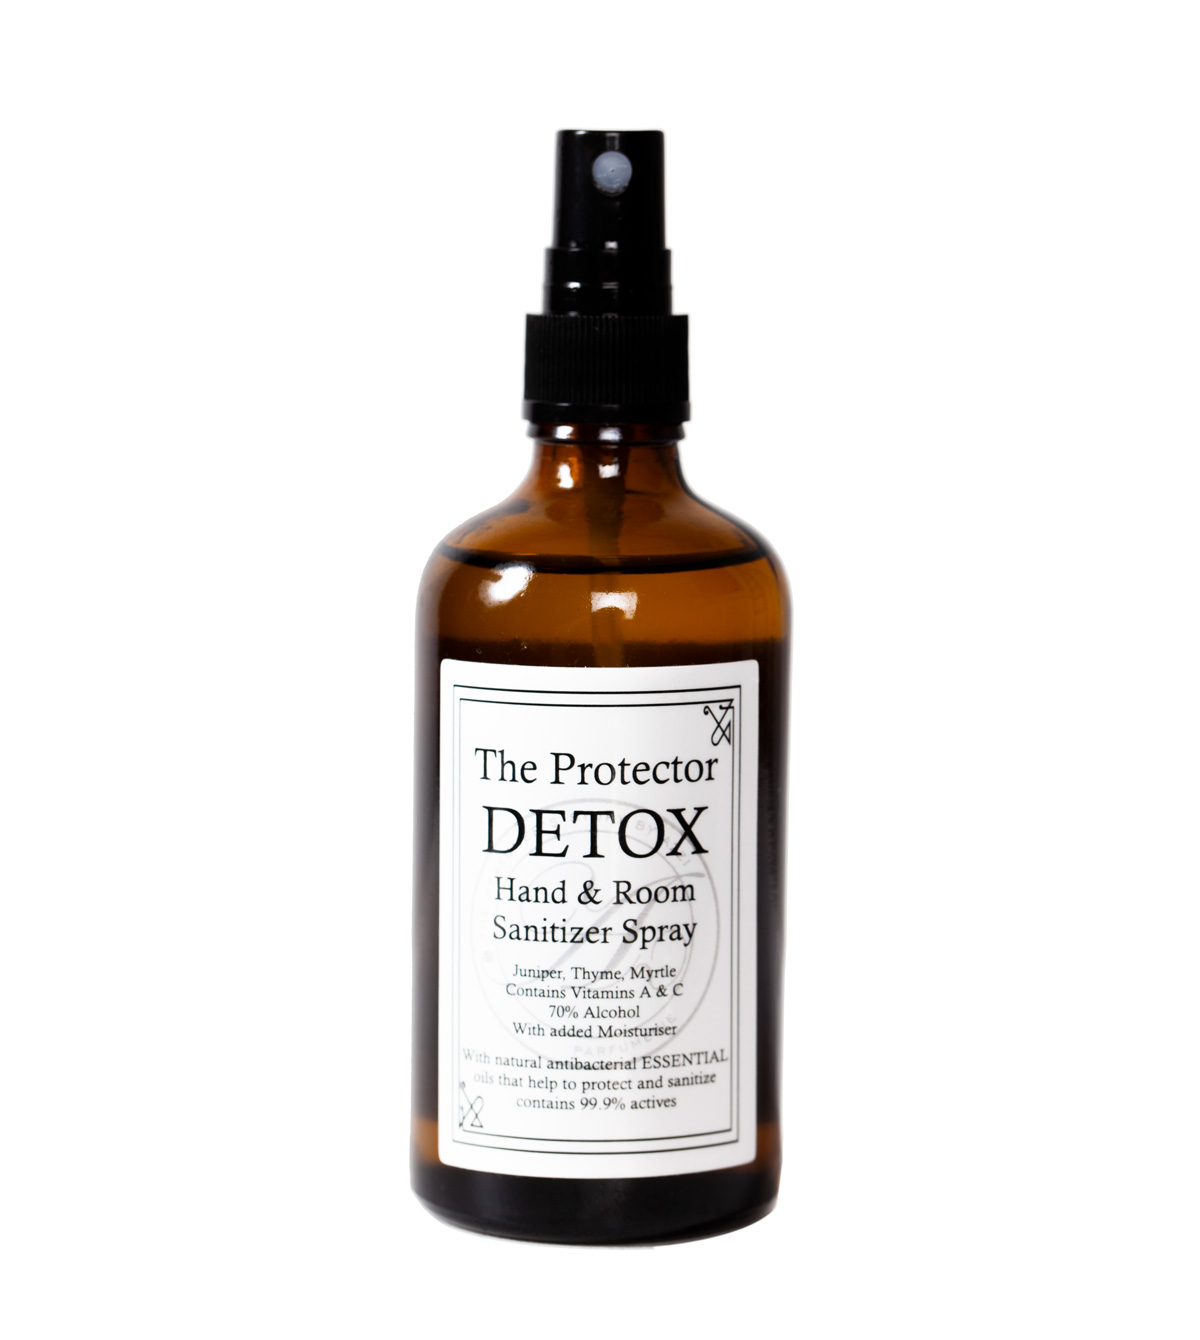 The Protector Detox, Hand & Room Sanitizer Spray